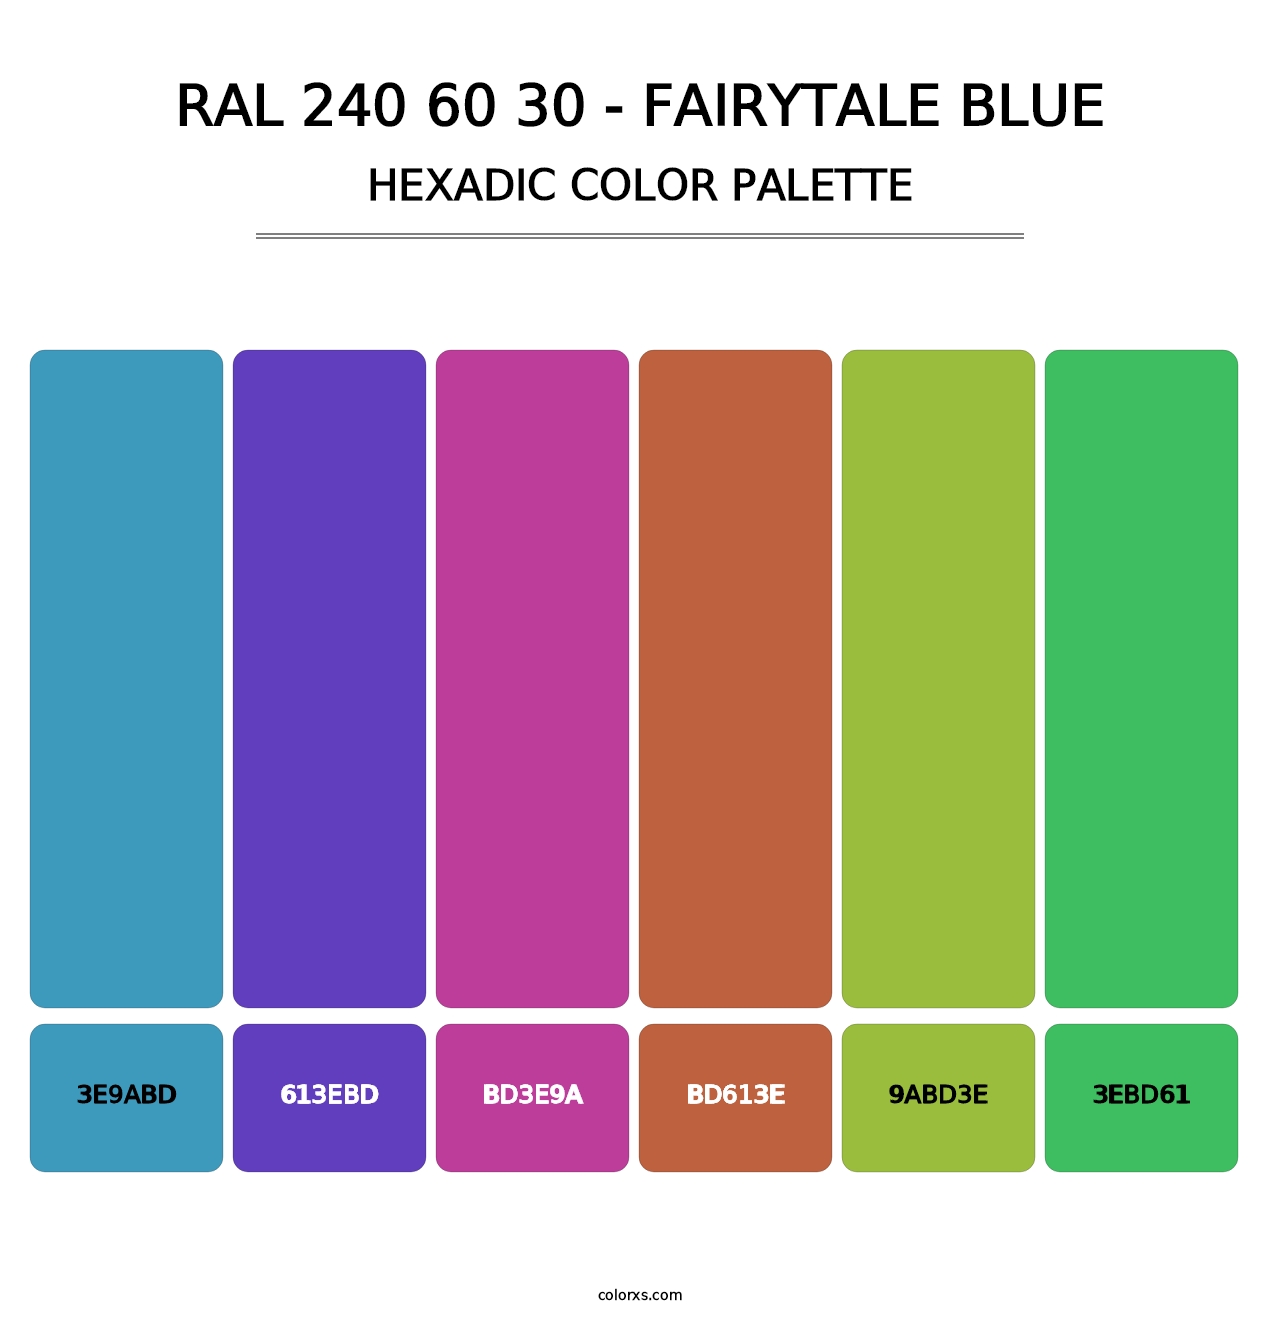 RAL 240 60 30 - Fairytale Blue - Hexadic Color Palette